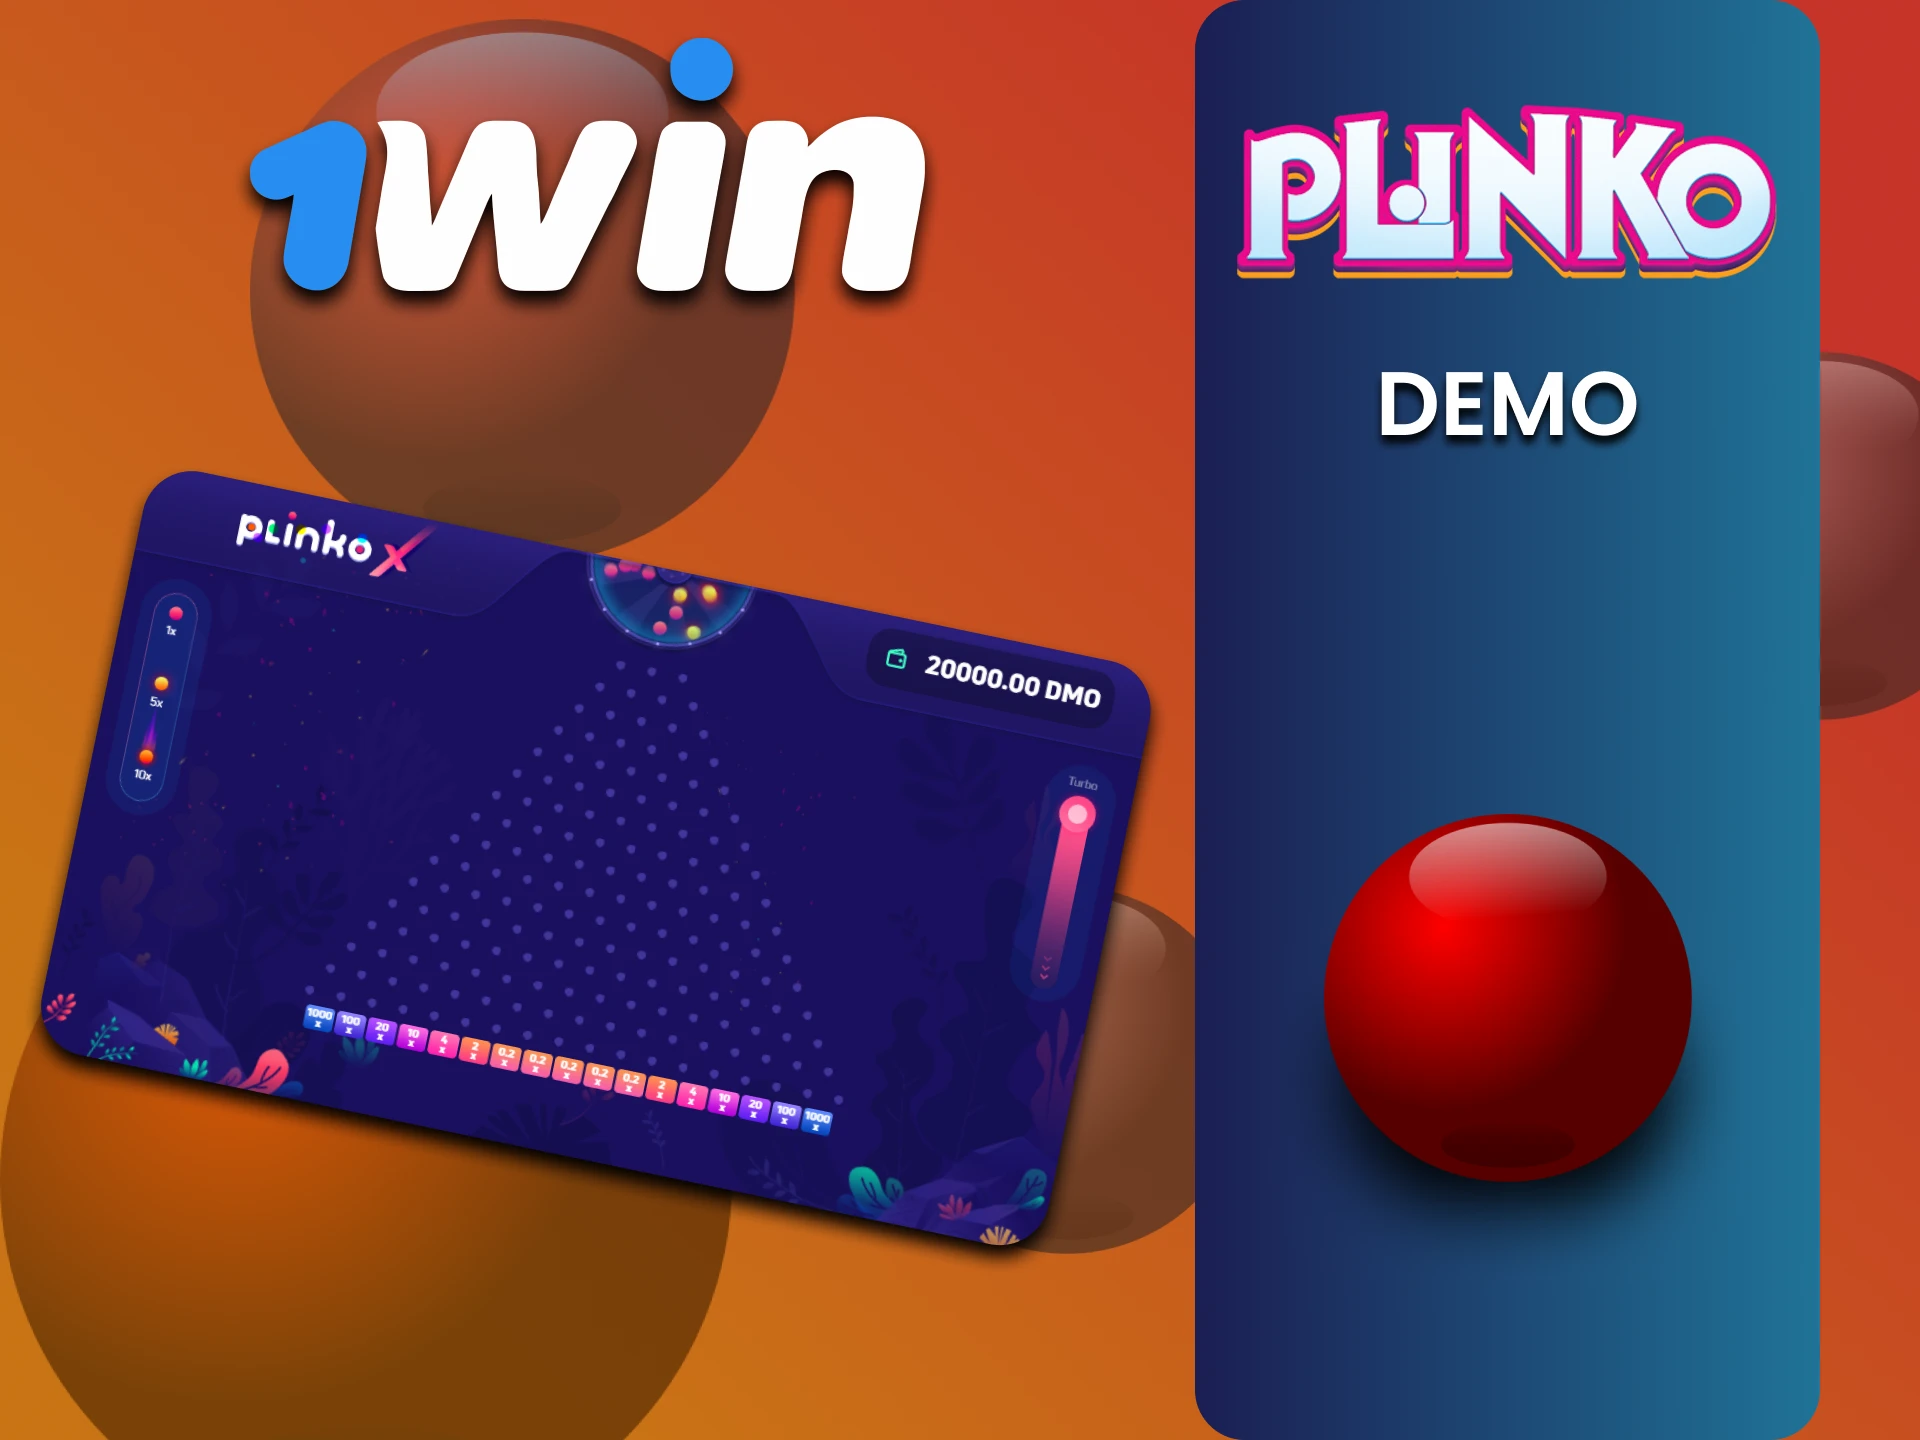 Practice the demo version of the Plinko game on 1win.